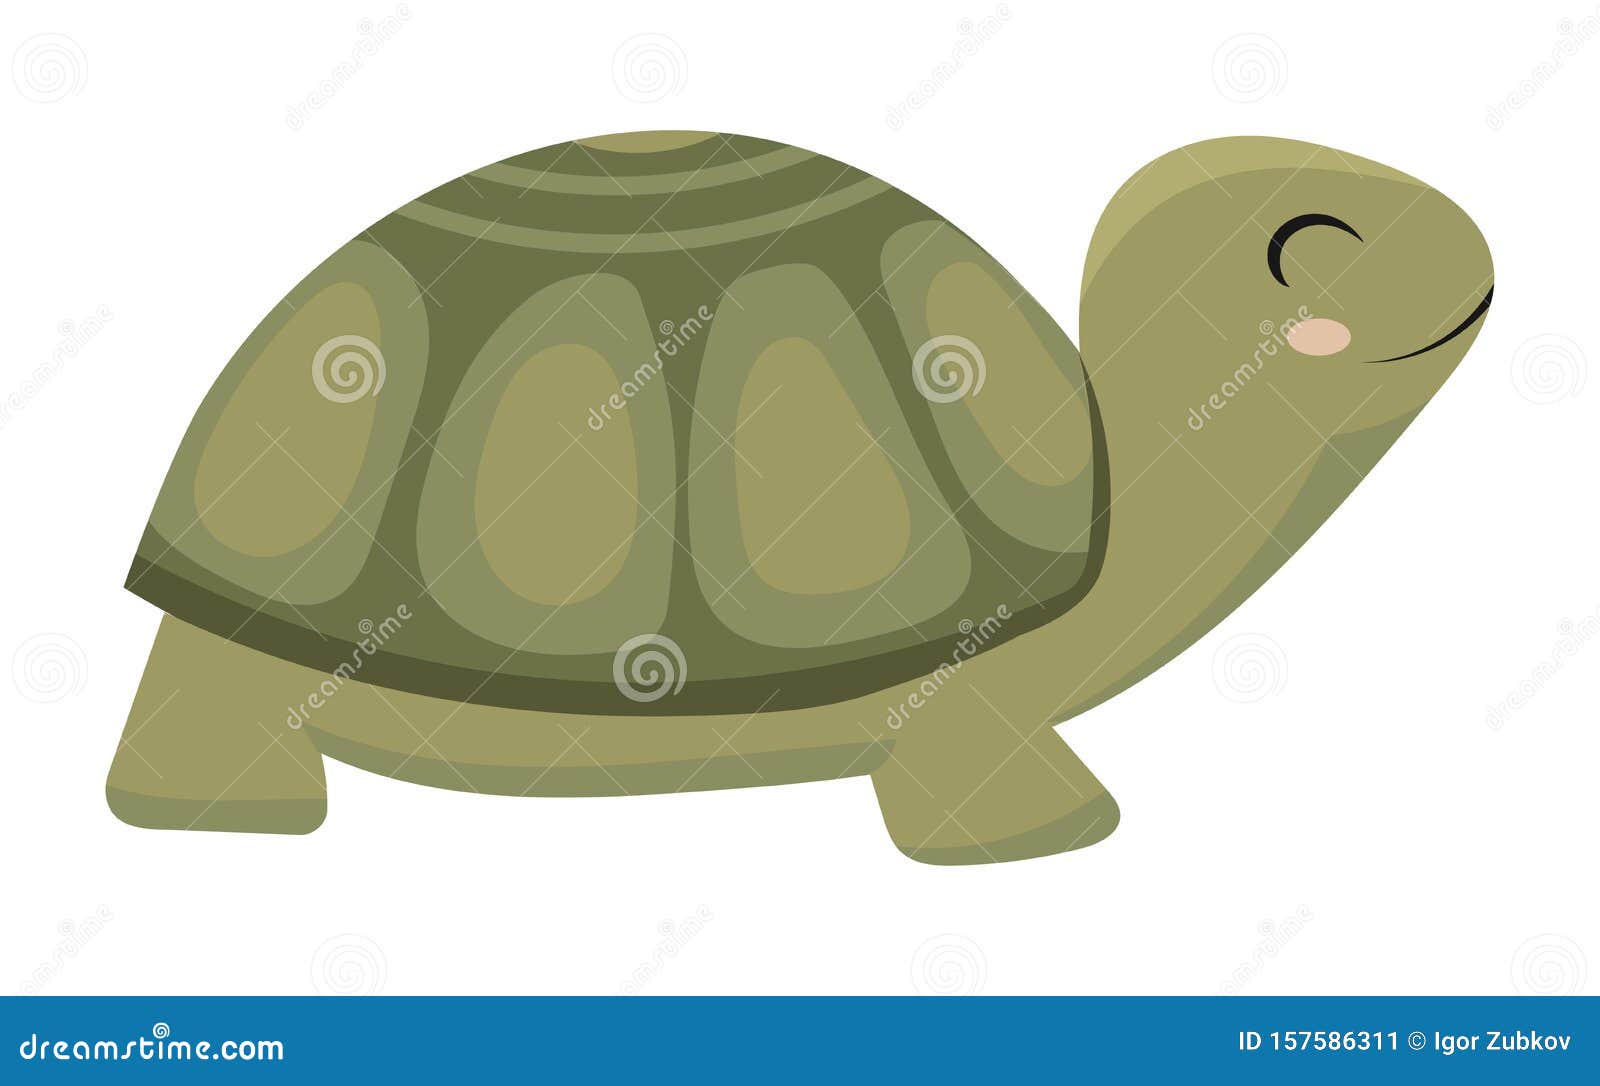 How to Draw a Turtle 🐢 Tortoise Emoji Easy - YouTube